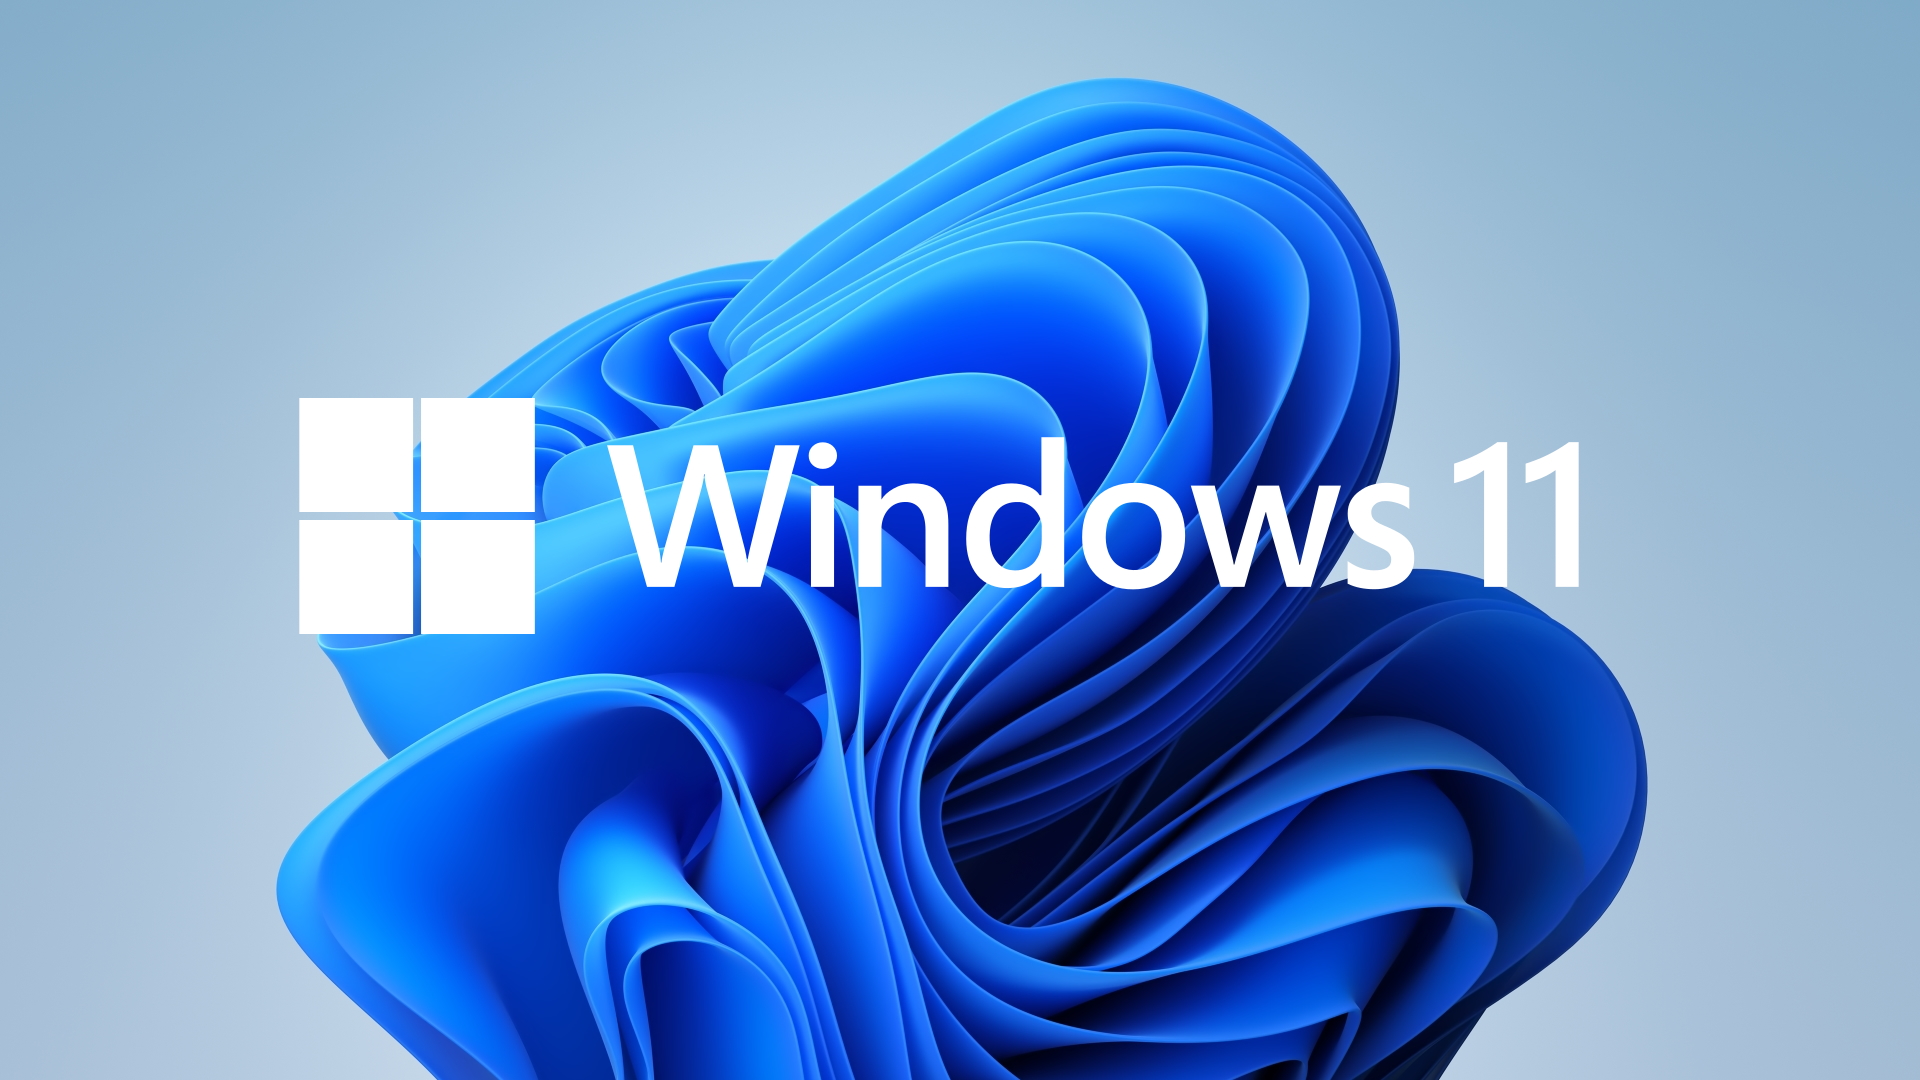 windows 10 pro insider preiview recent update will not udate